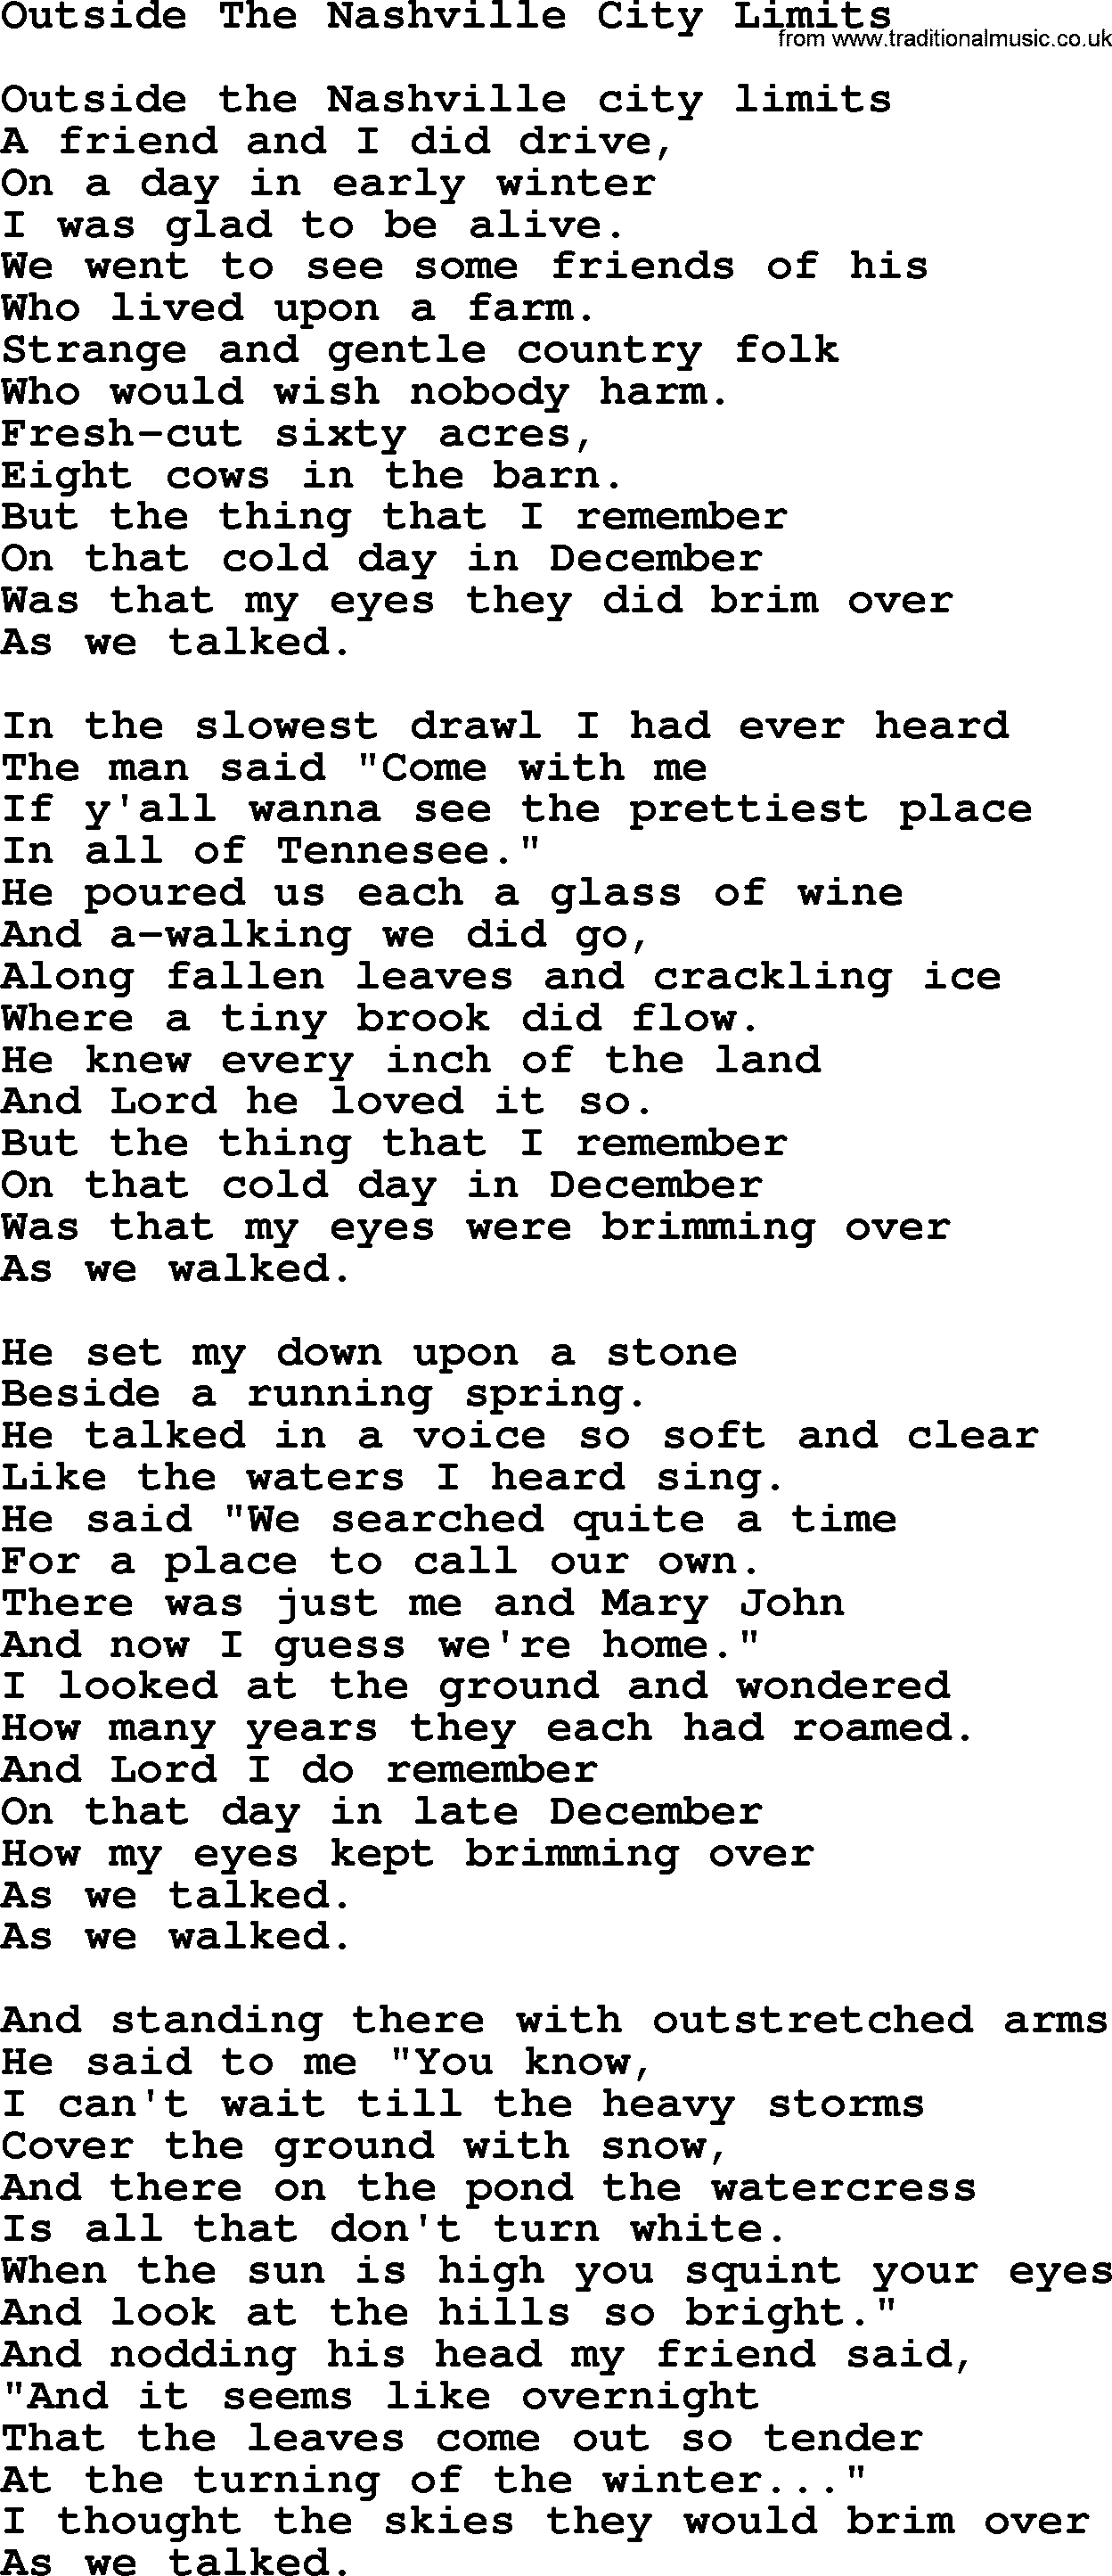 Joan Baez song Outside The Nashville City Limits, lyrics